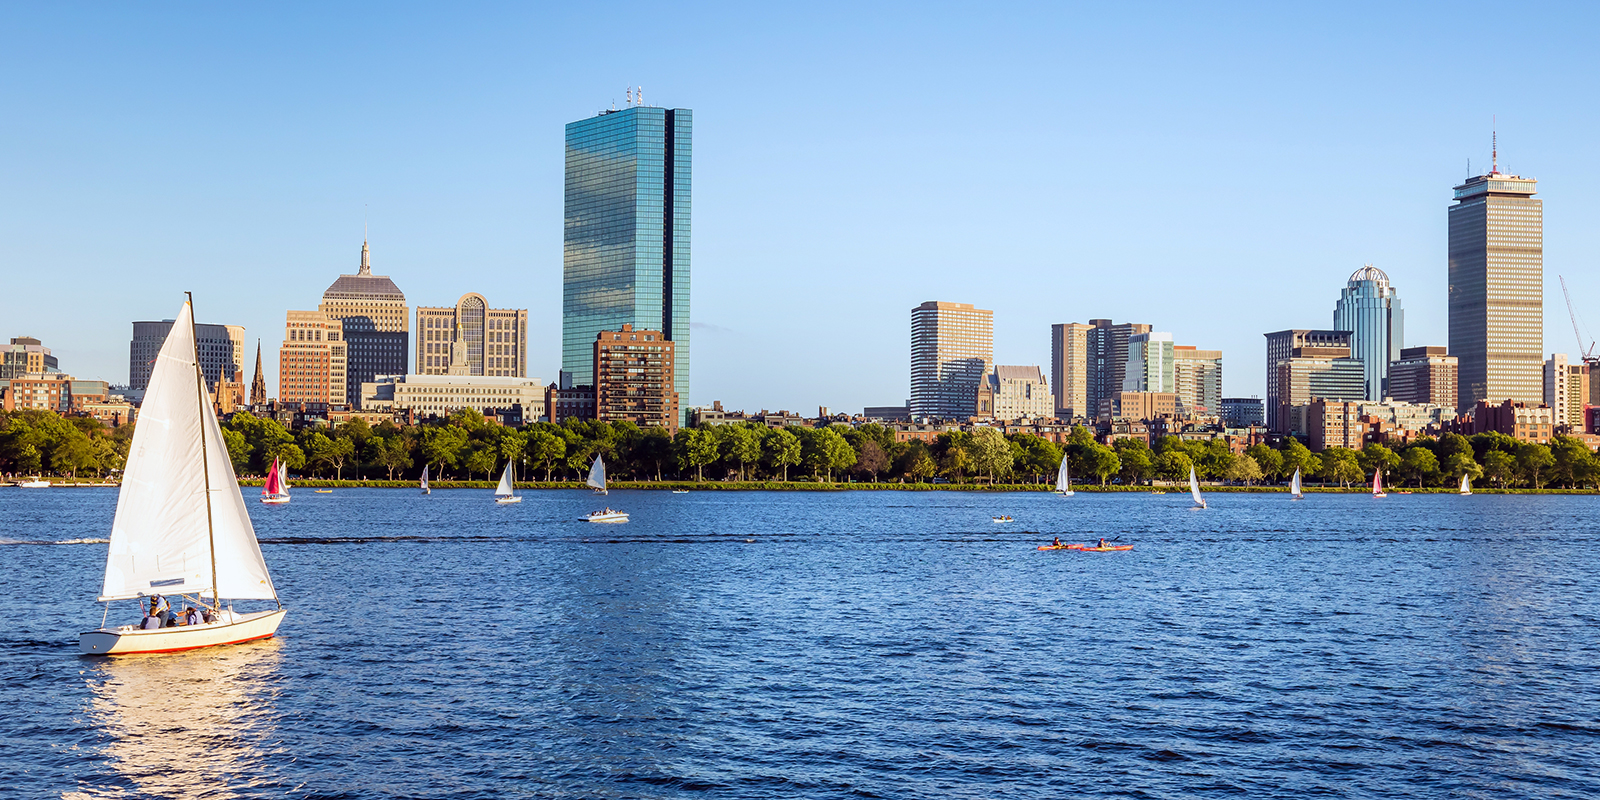 Revolution, Robotics and Research: Planning a STEM Adventure in Boston